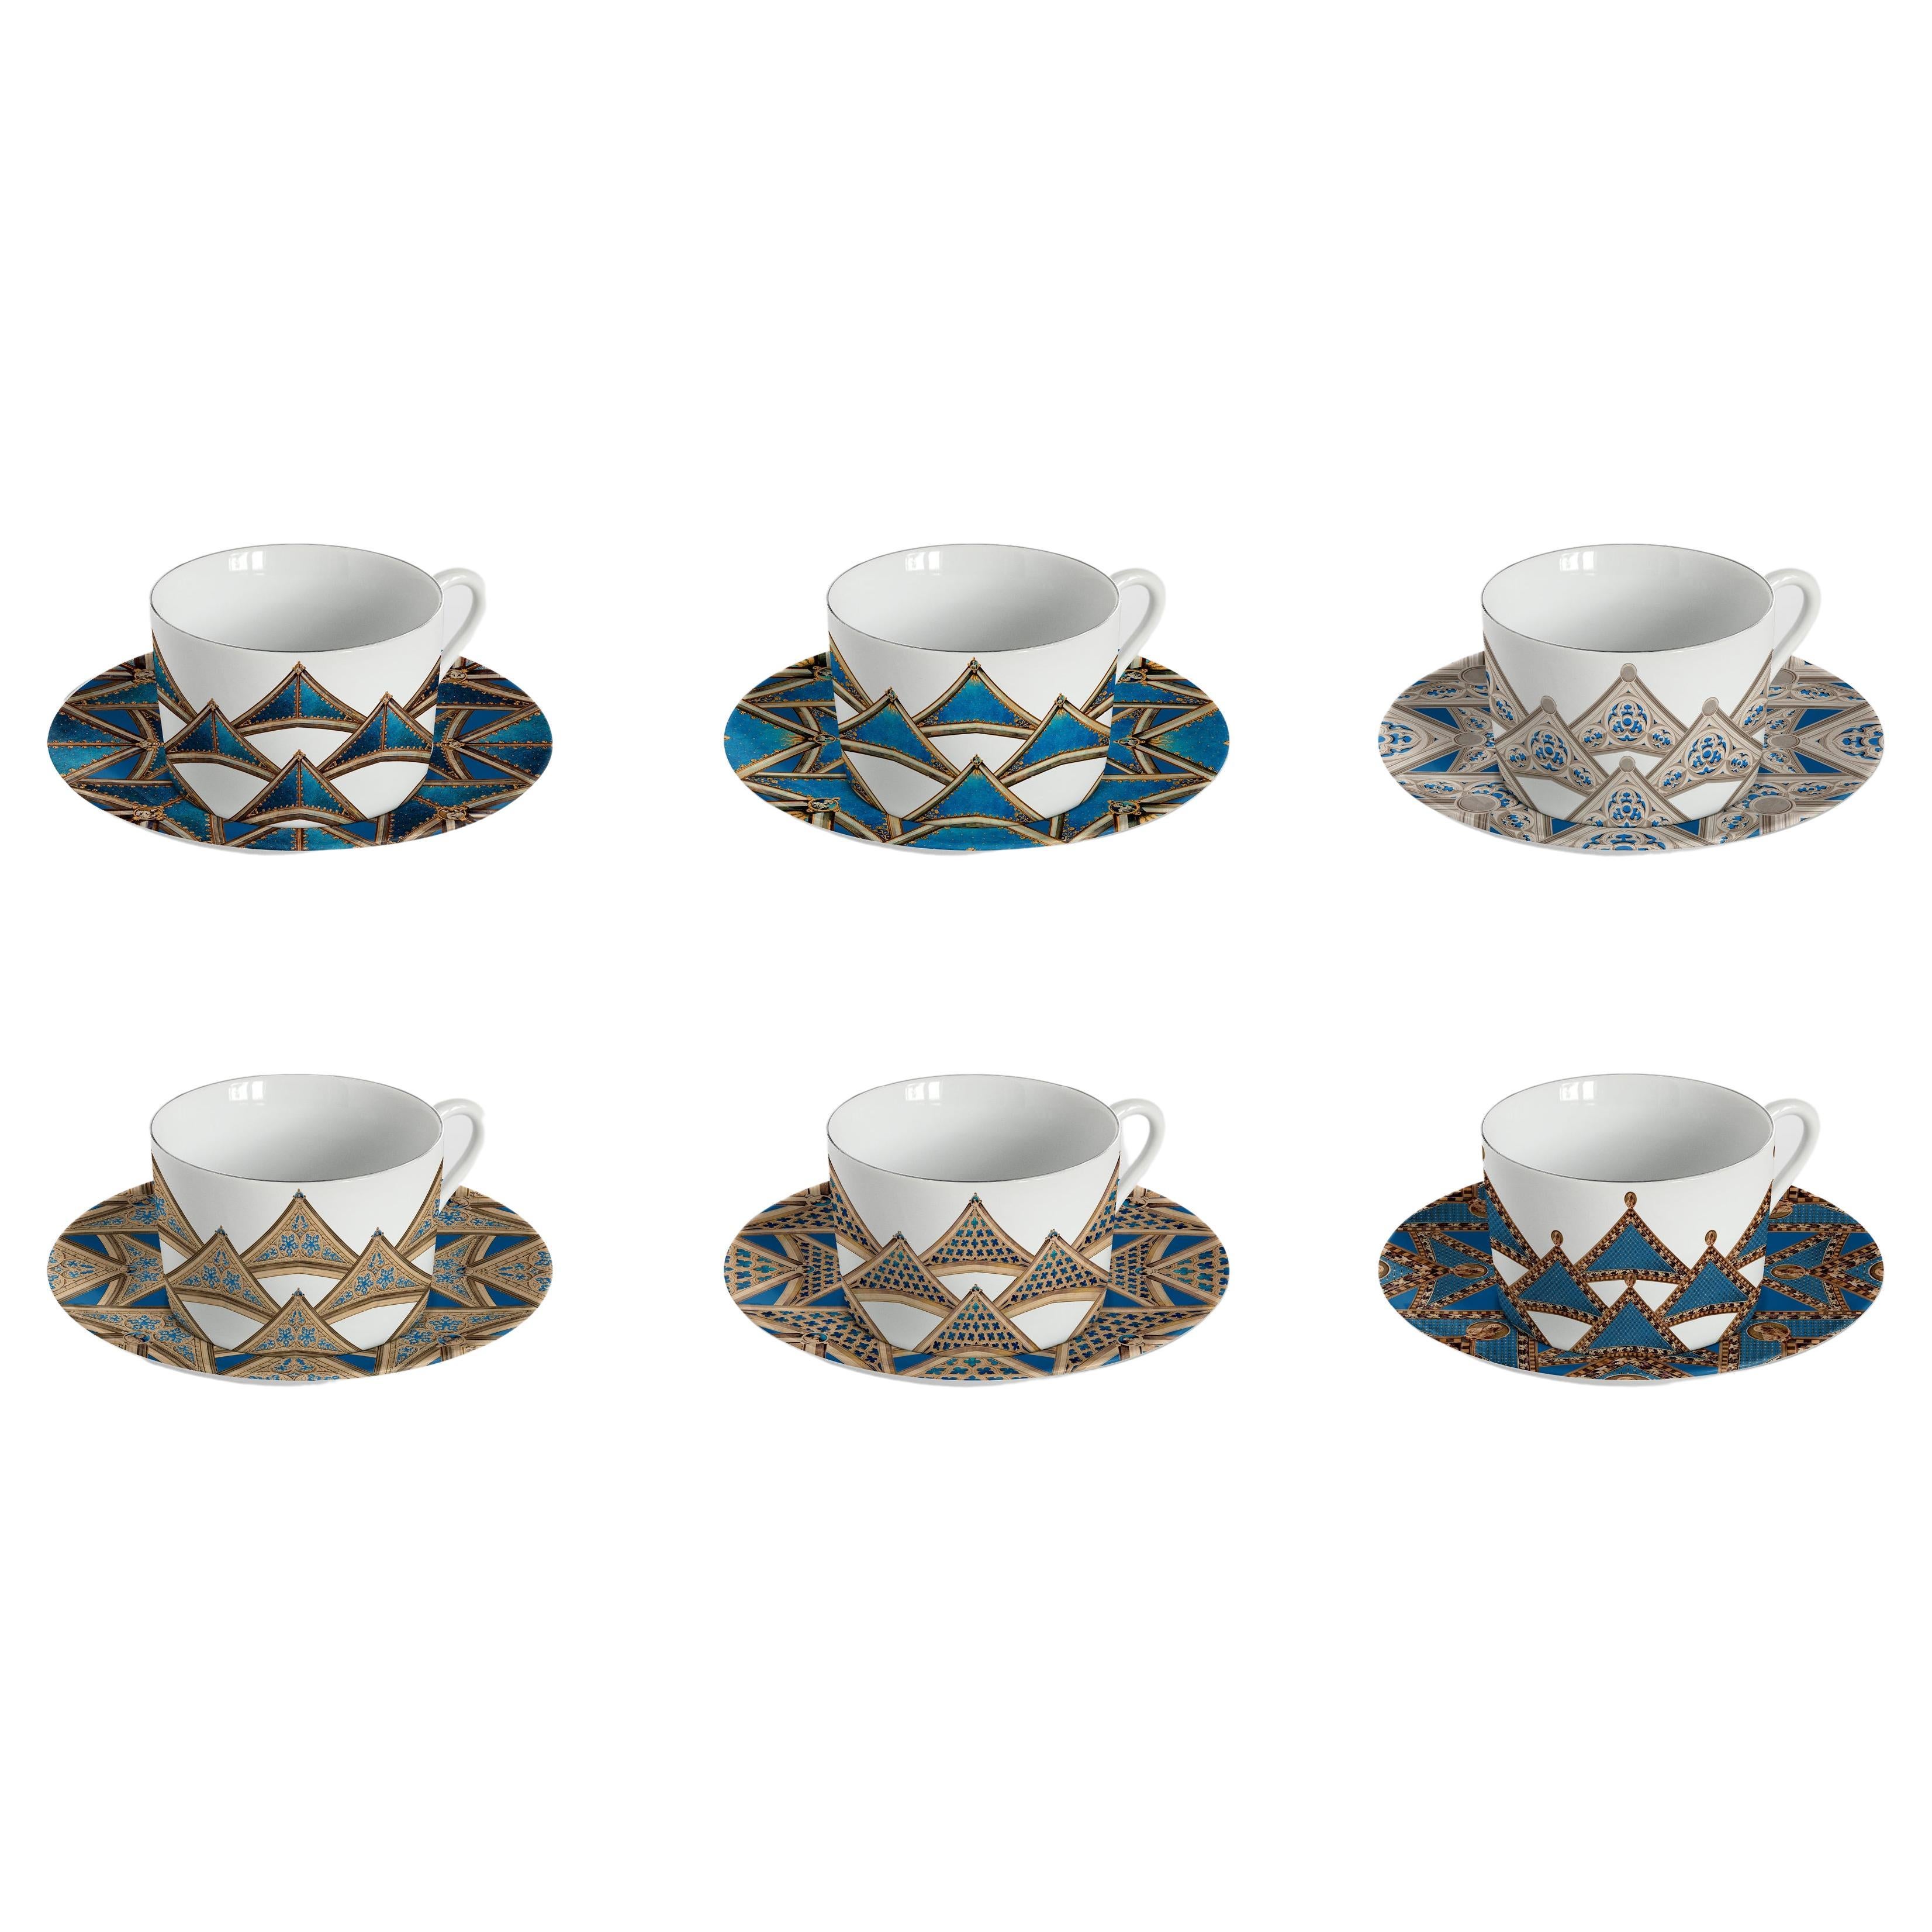 Le Volte Celesti, Six Contemporary Decorated Tea Cups with Plates For Sale